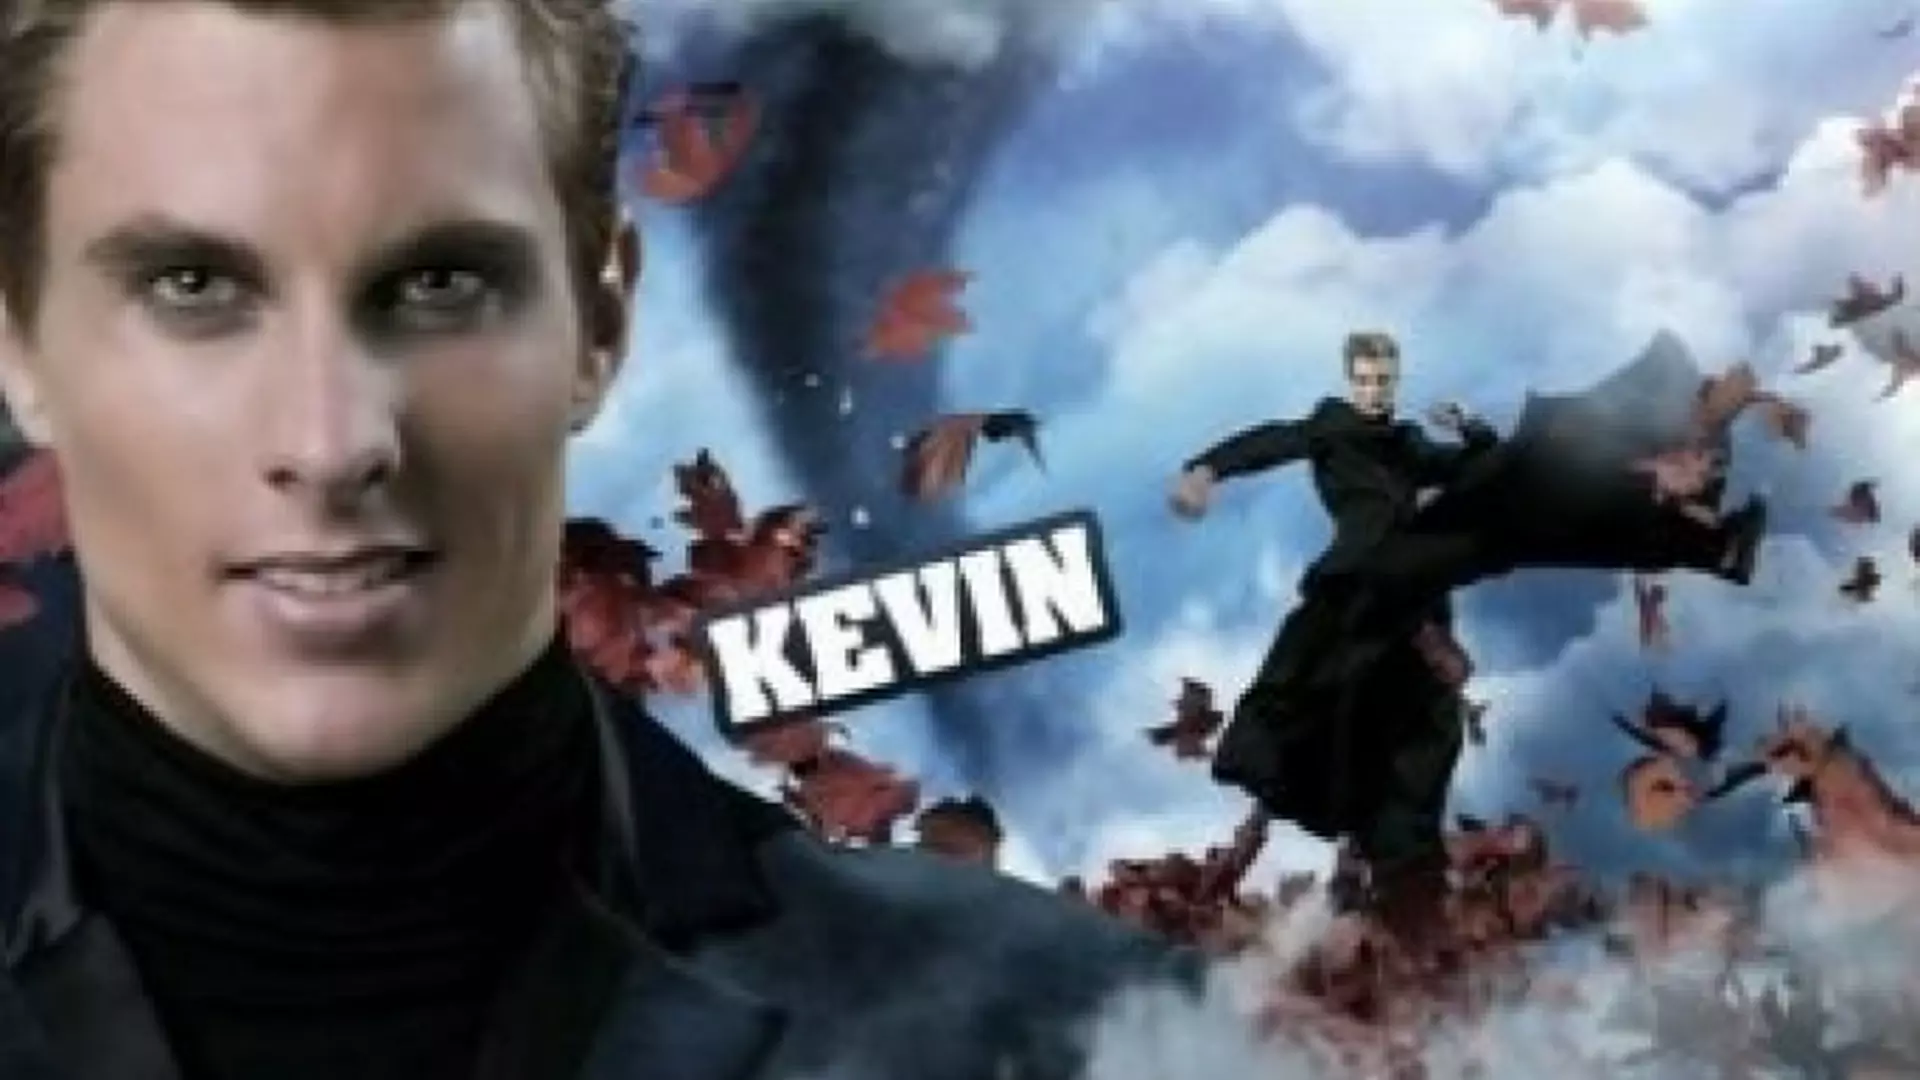 Kevin (Secret Story 3) - Albumy fanów